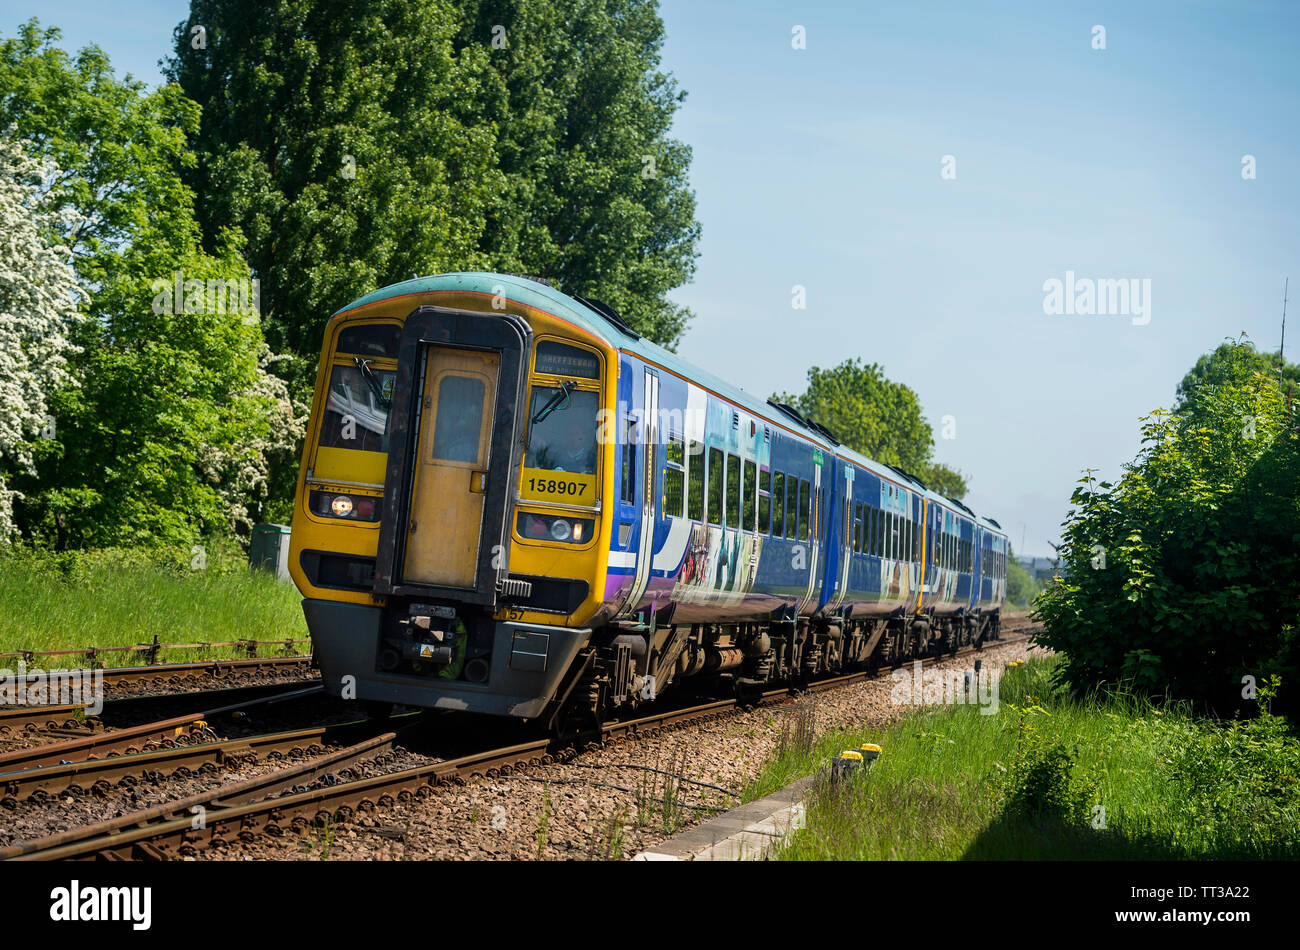 A Northern Rail class 158 passenger train on it's way to Sheffield, United Kingdom. Stock Photo